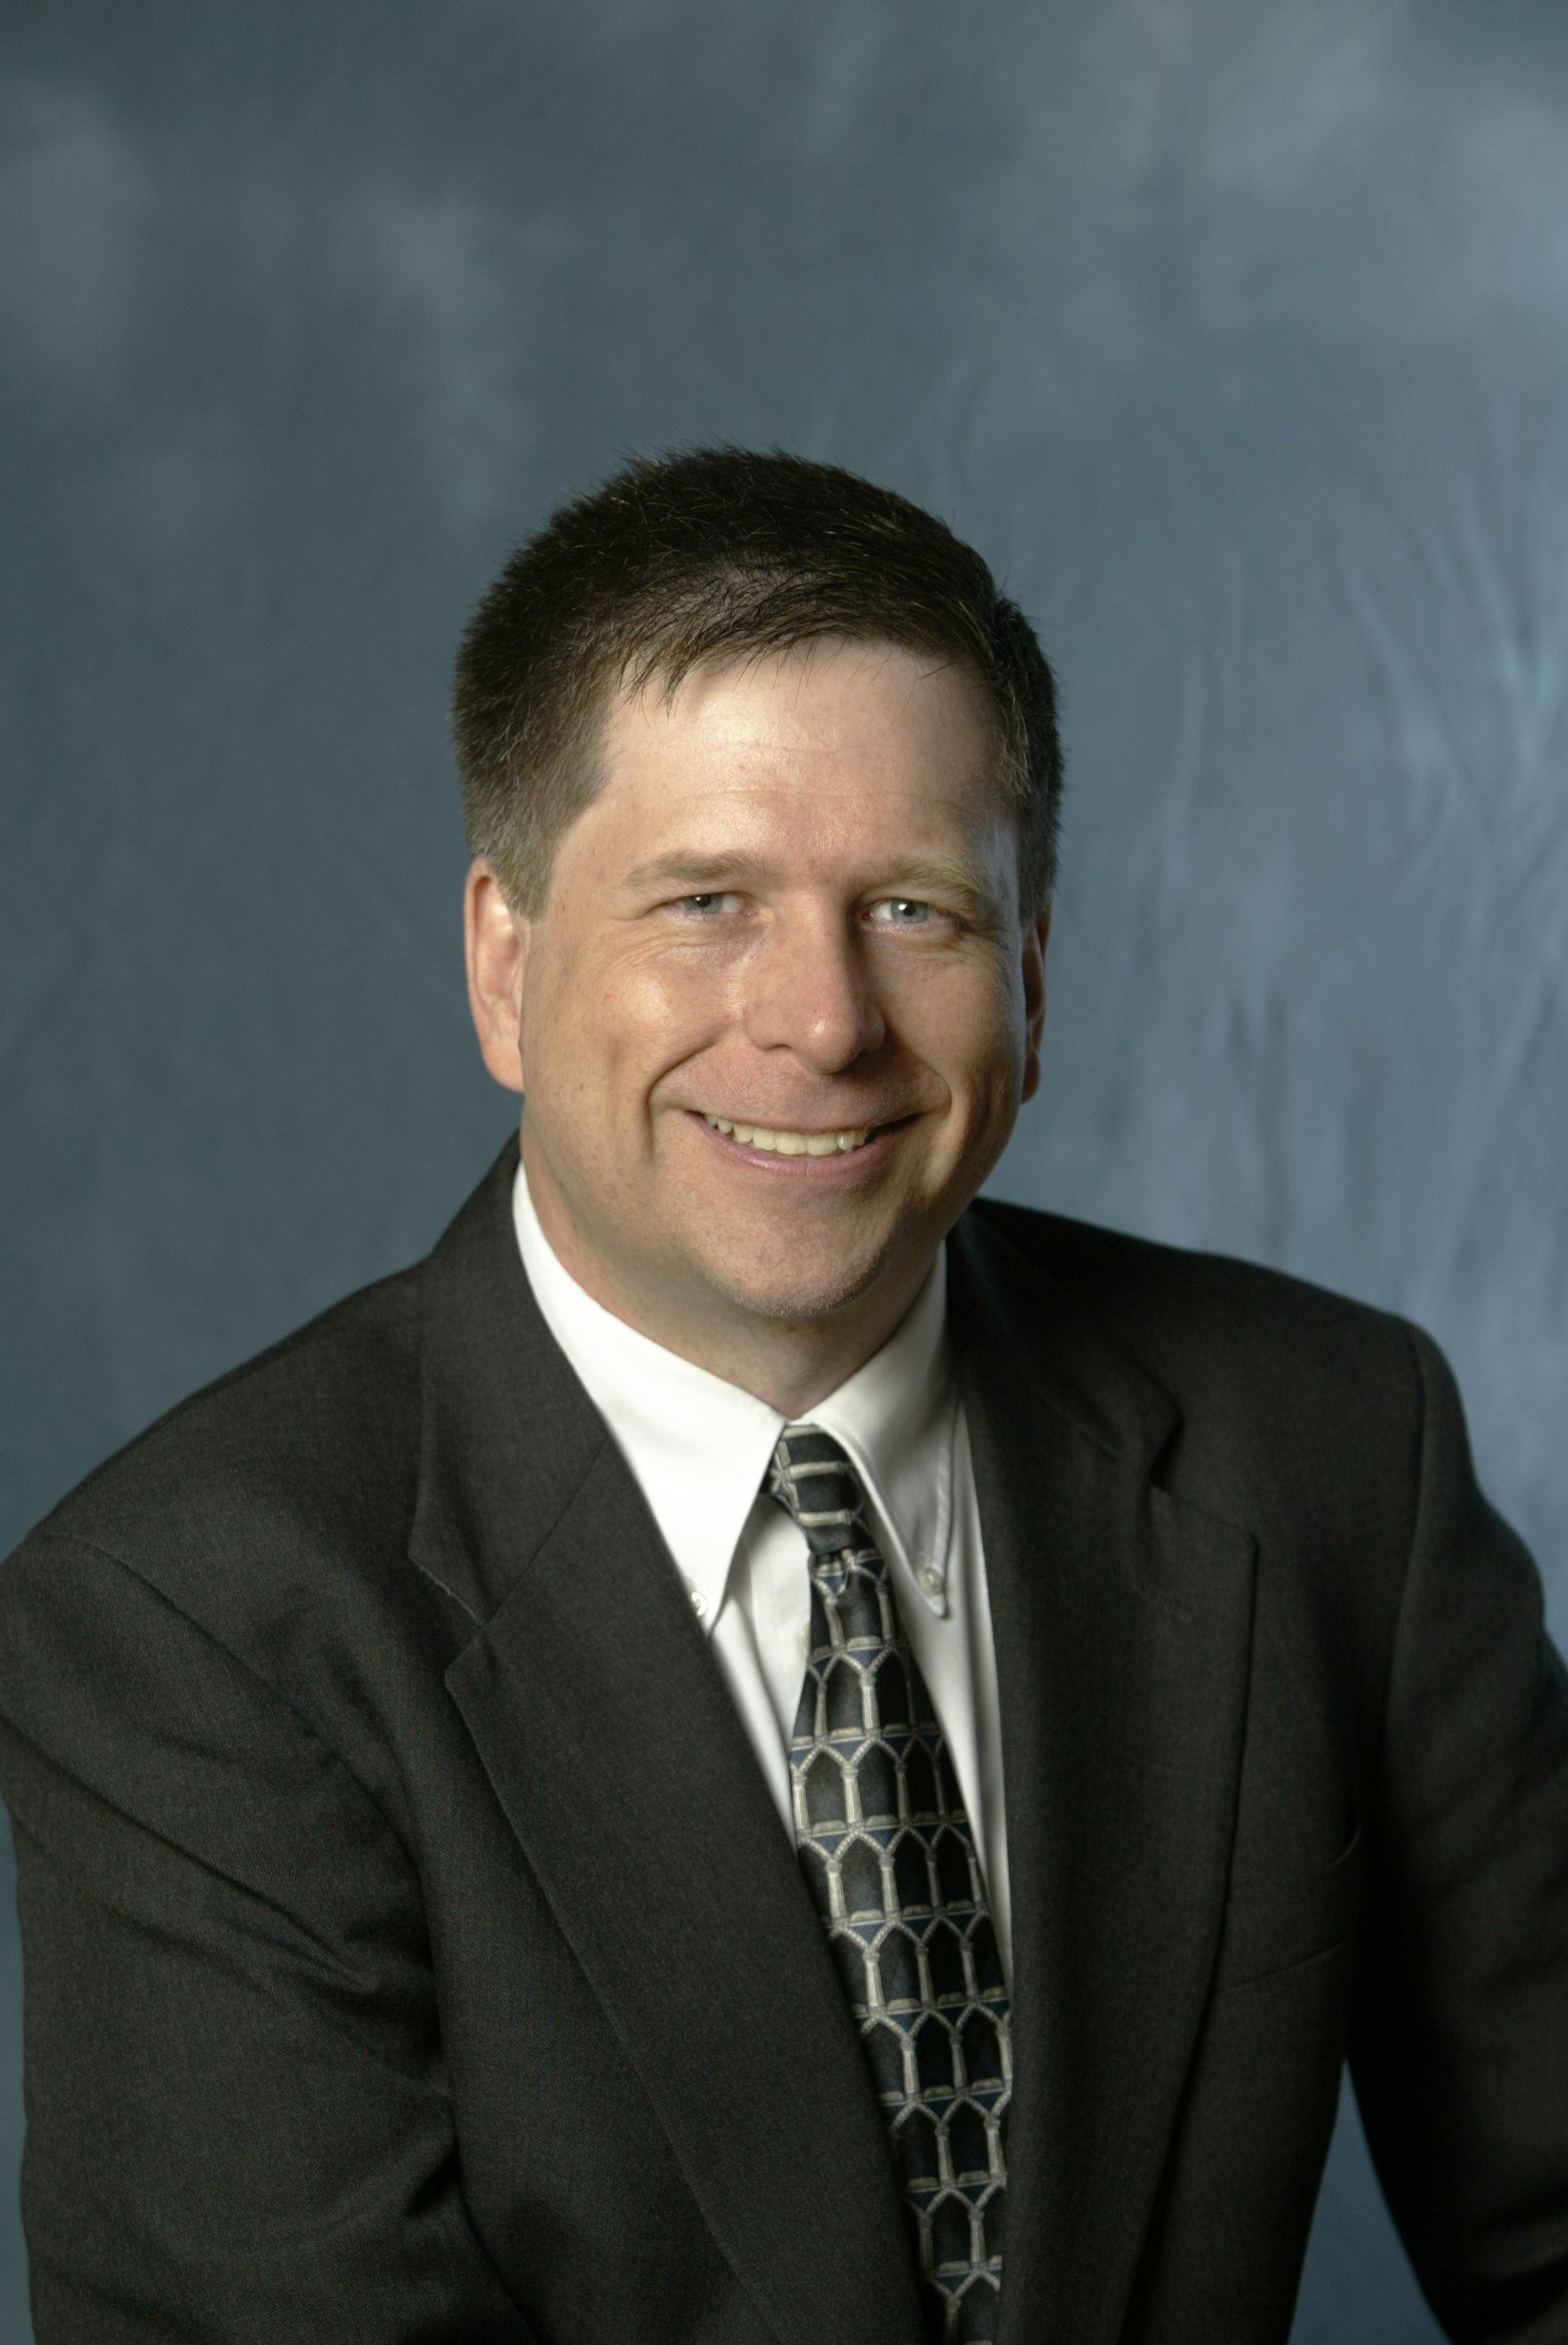 Rod Larson, Ph.D., R.Ph., is Founding Dean of the School of Pharmacy at Husson University